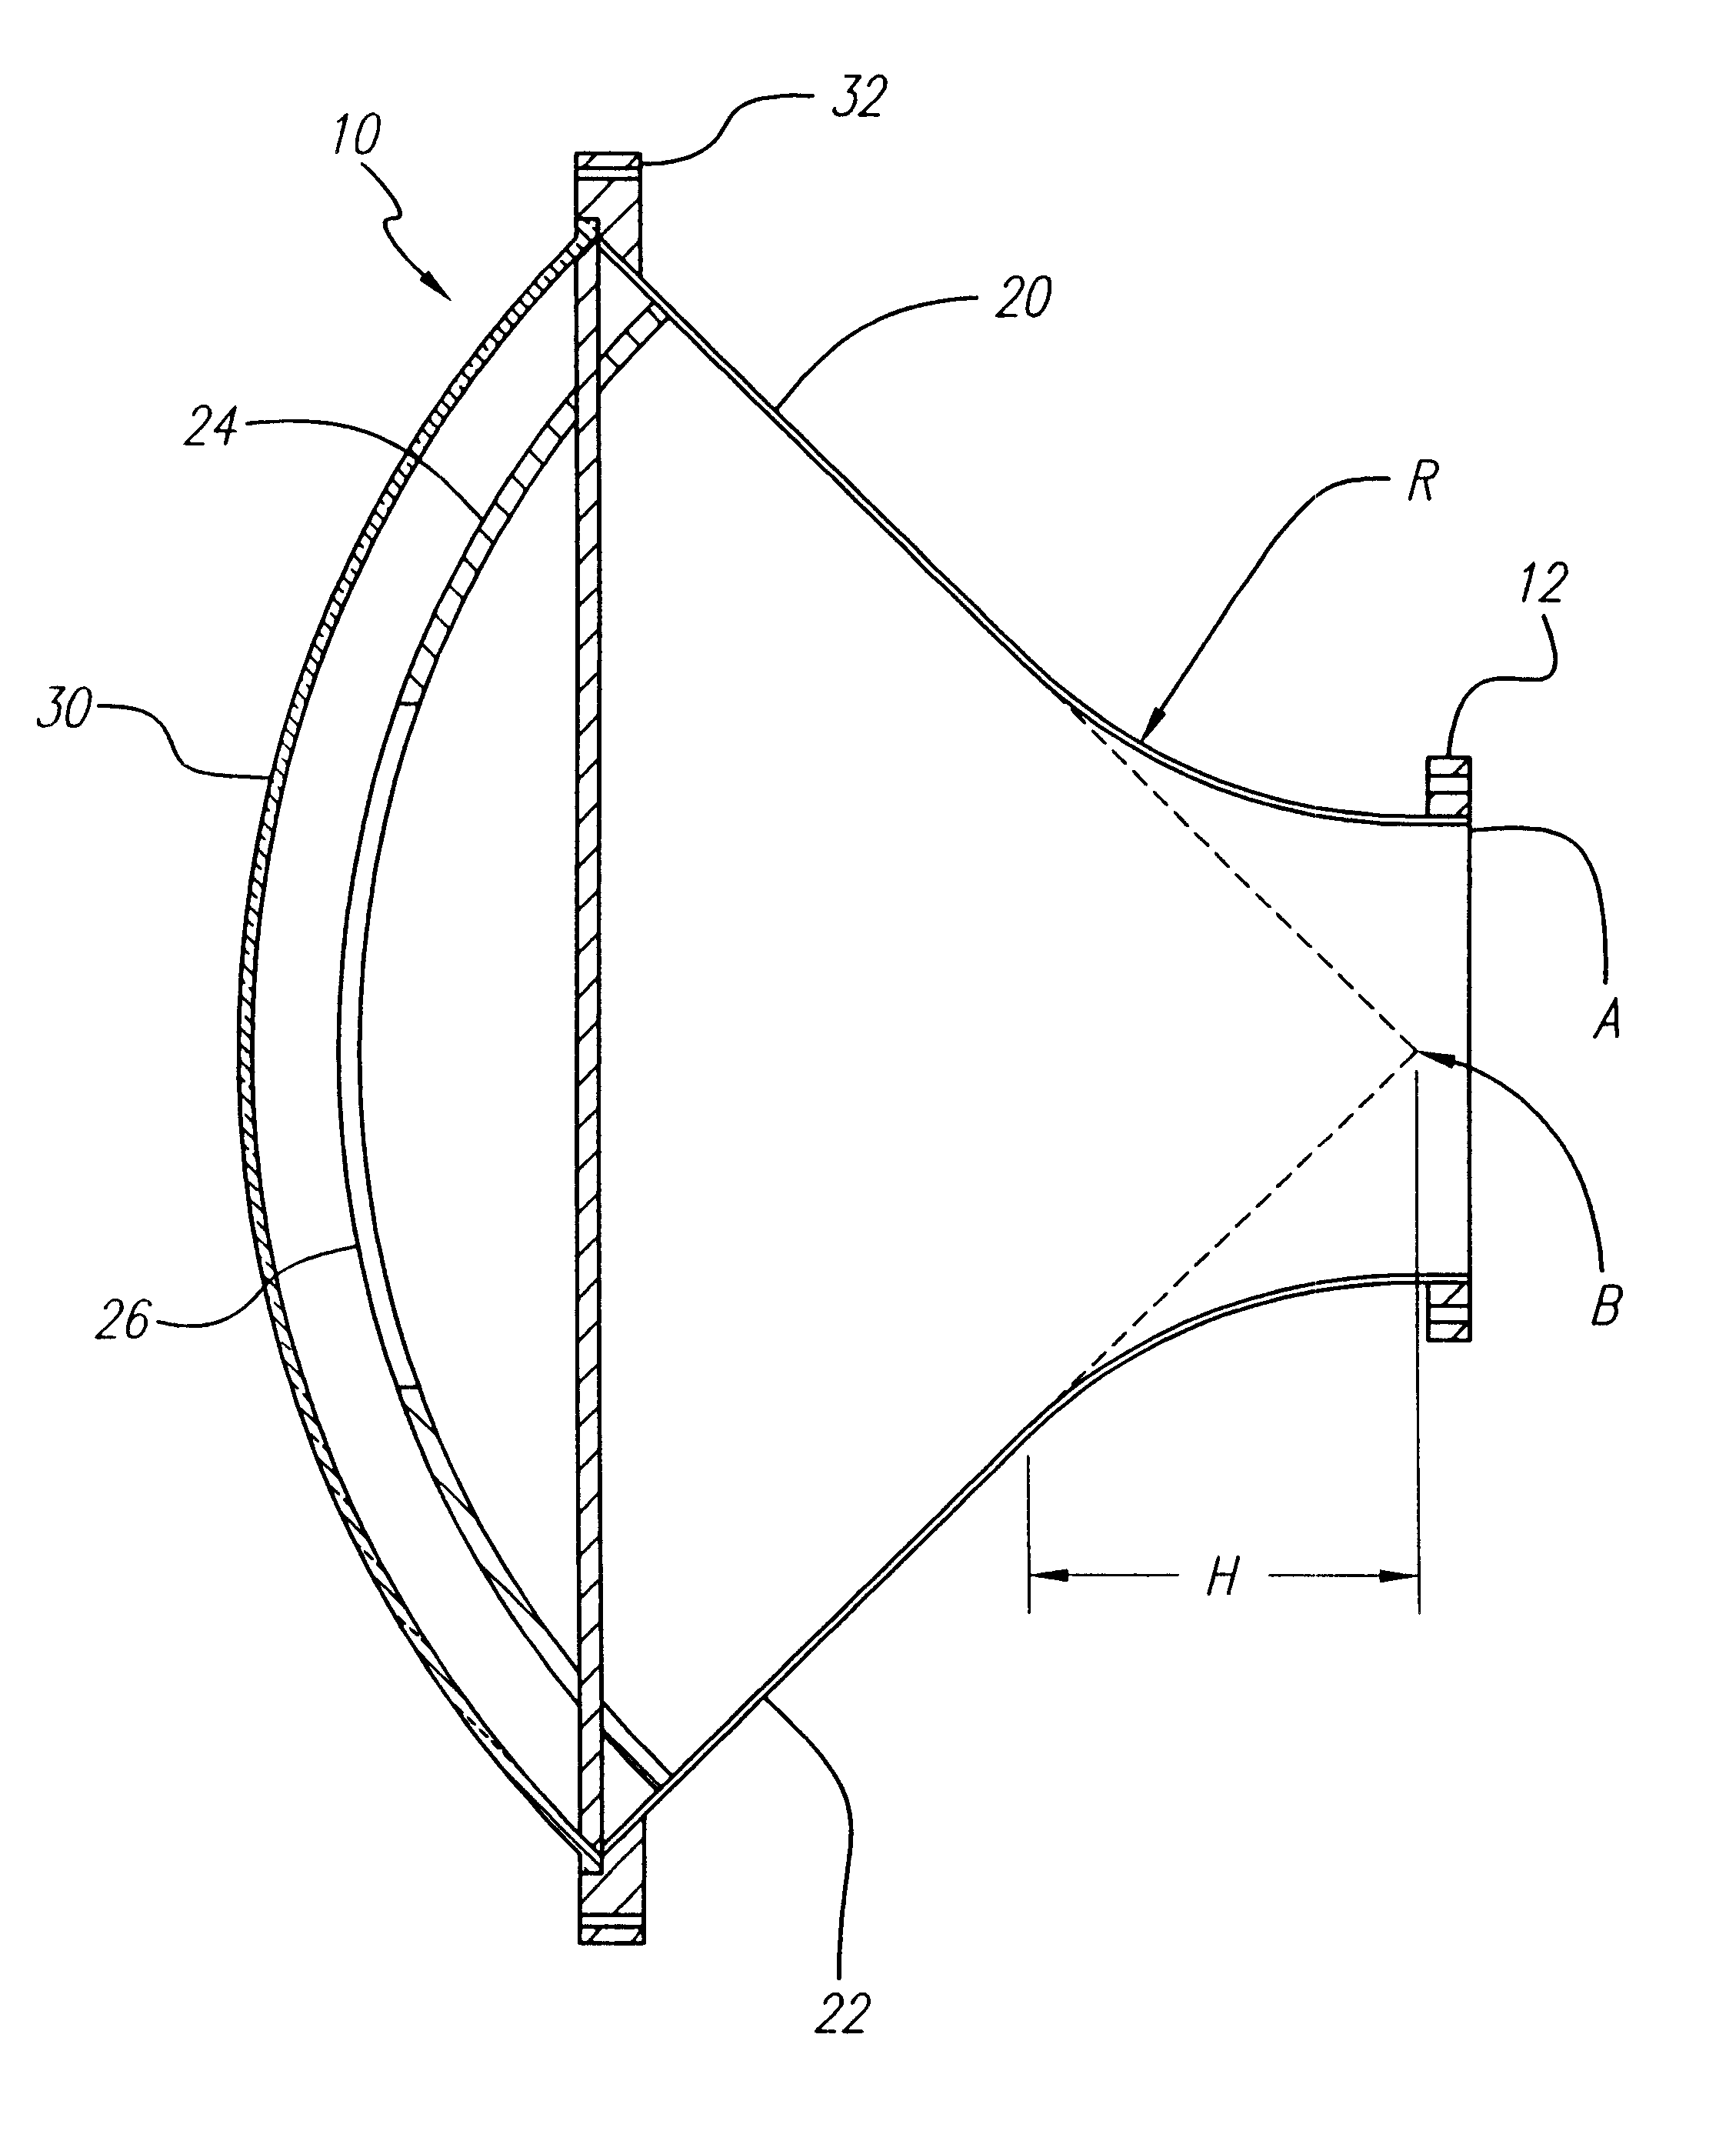 Dual-window high-power conical horn antenna